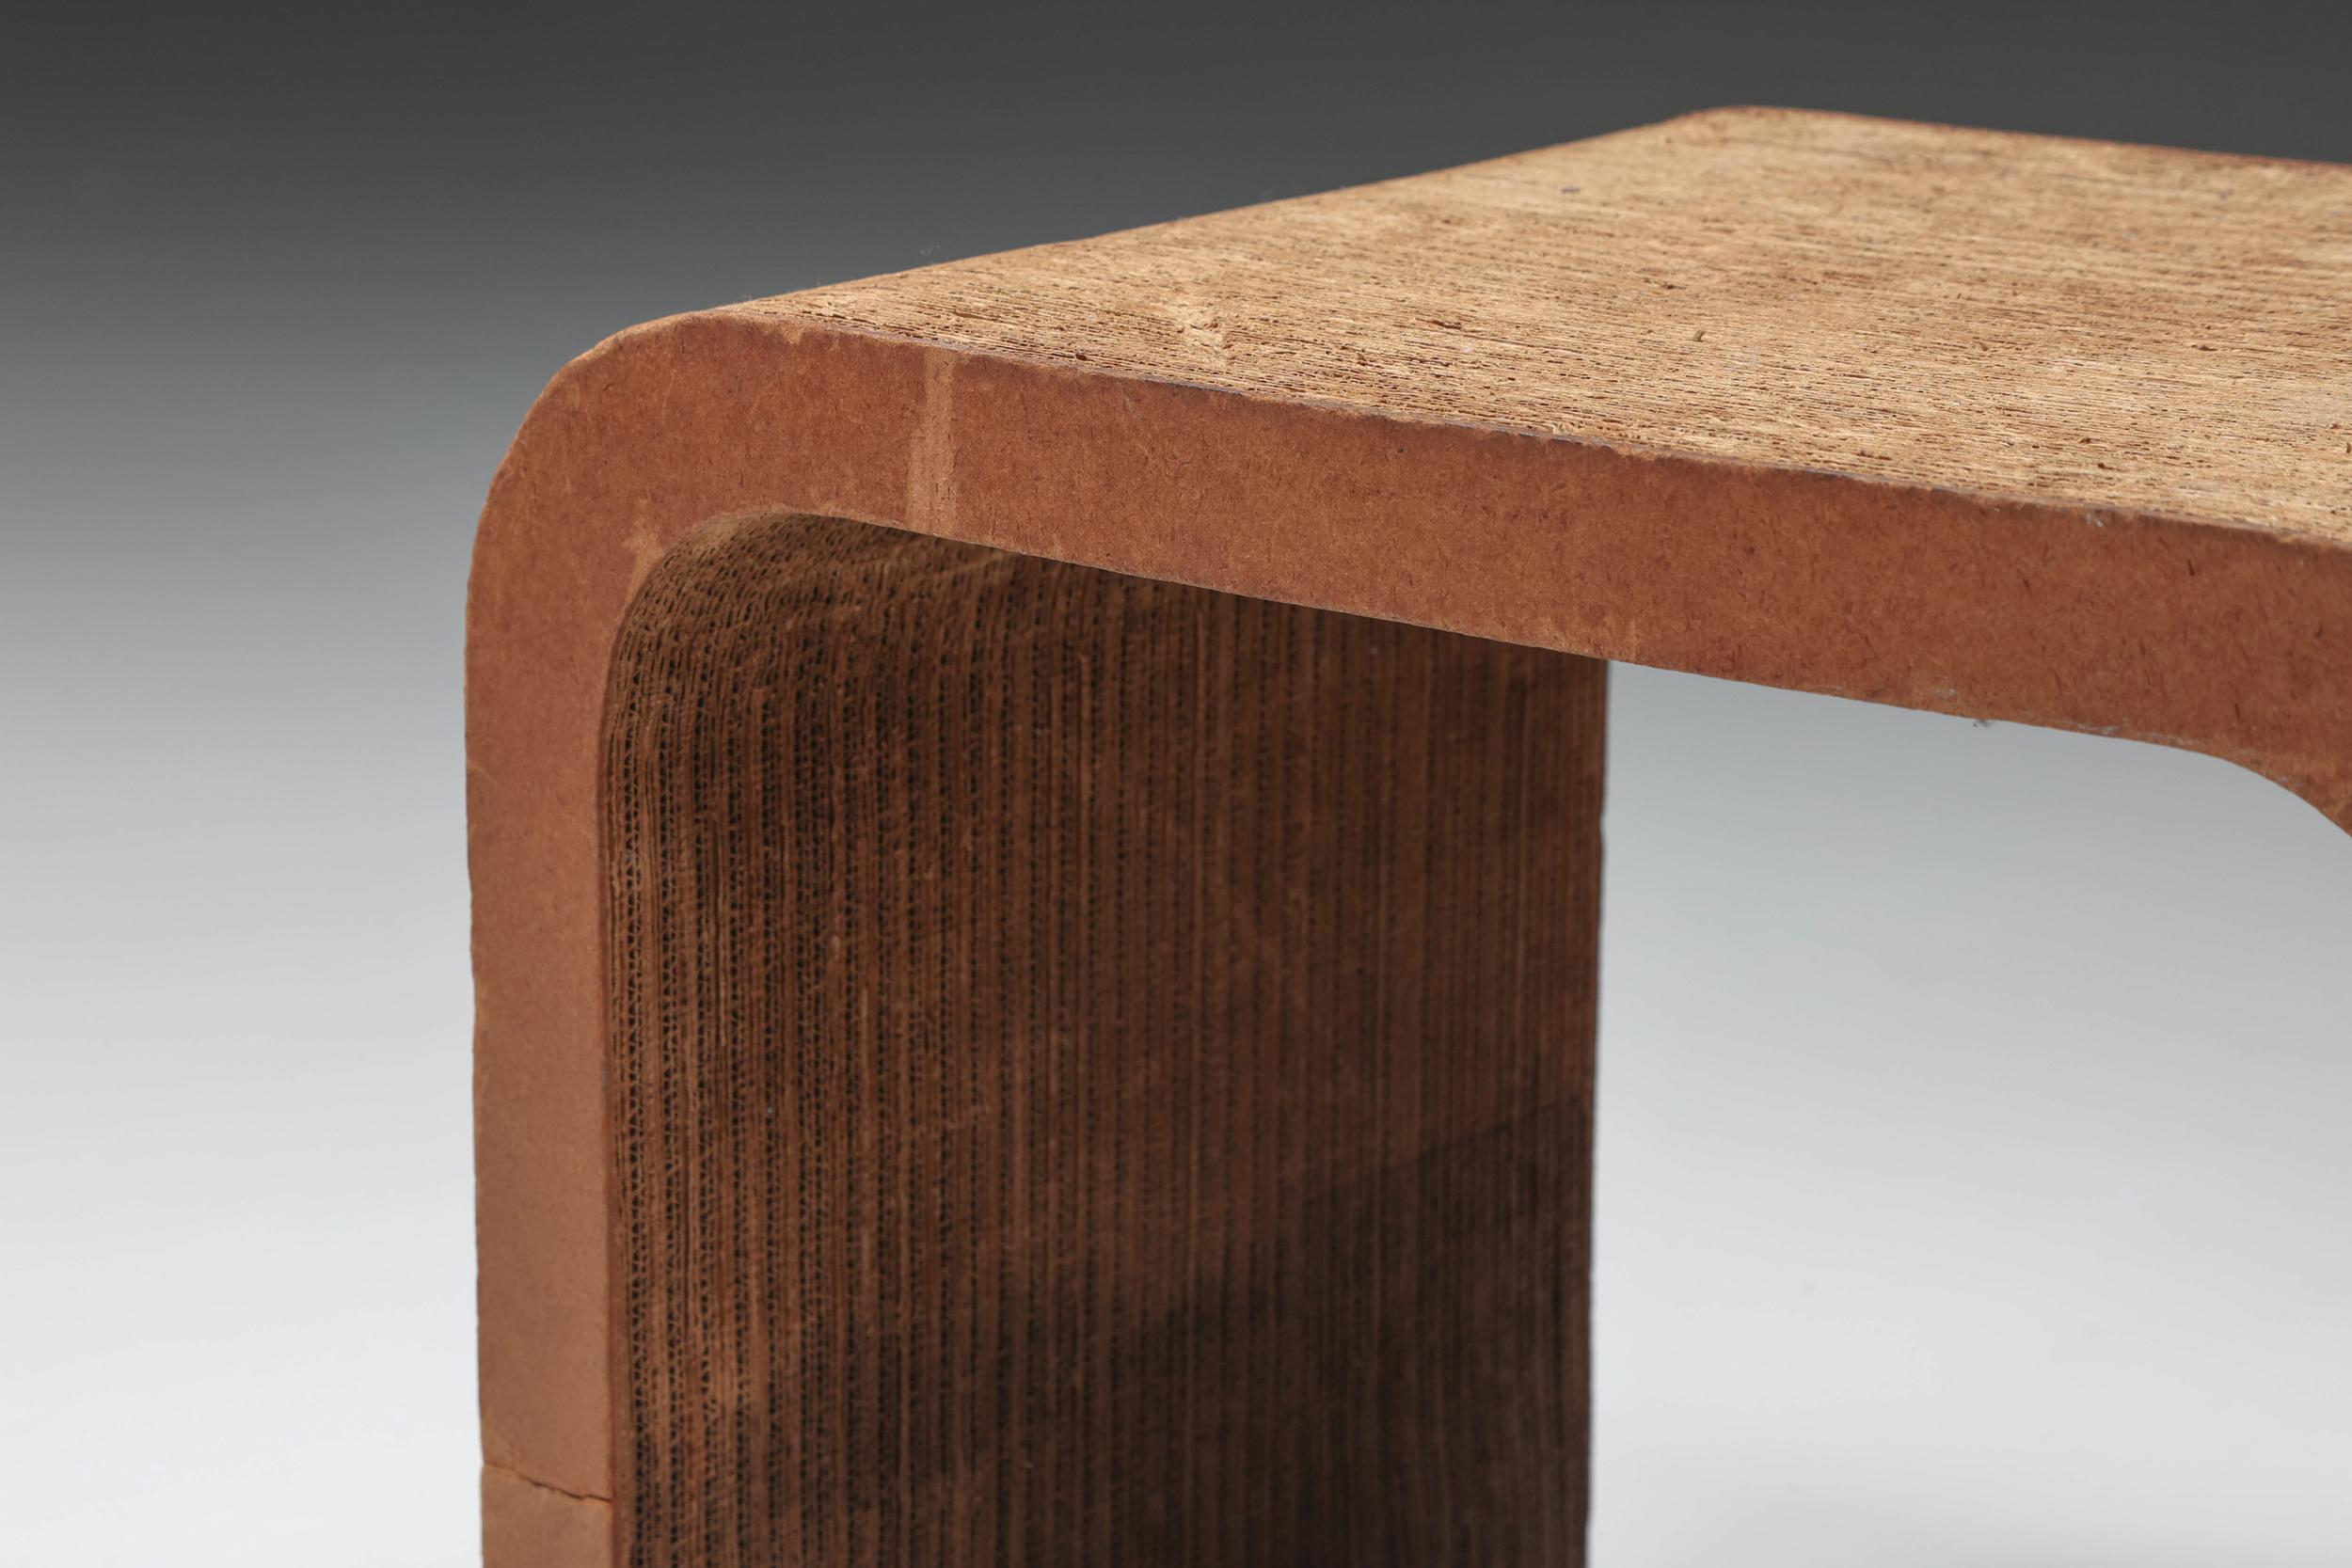 Organic Modern Frank Gehry Cardboard Stool, Vitra, deconstructivist, Easy Edges, Irwin, 1972